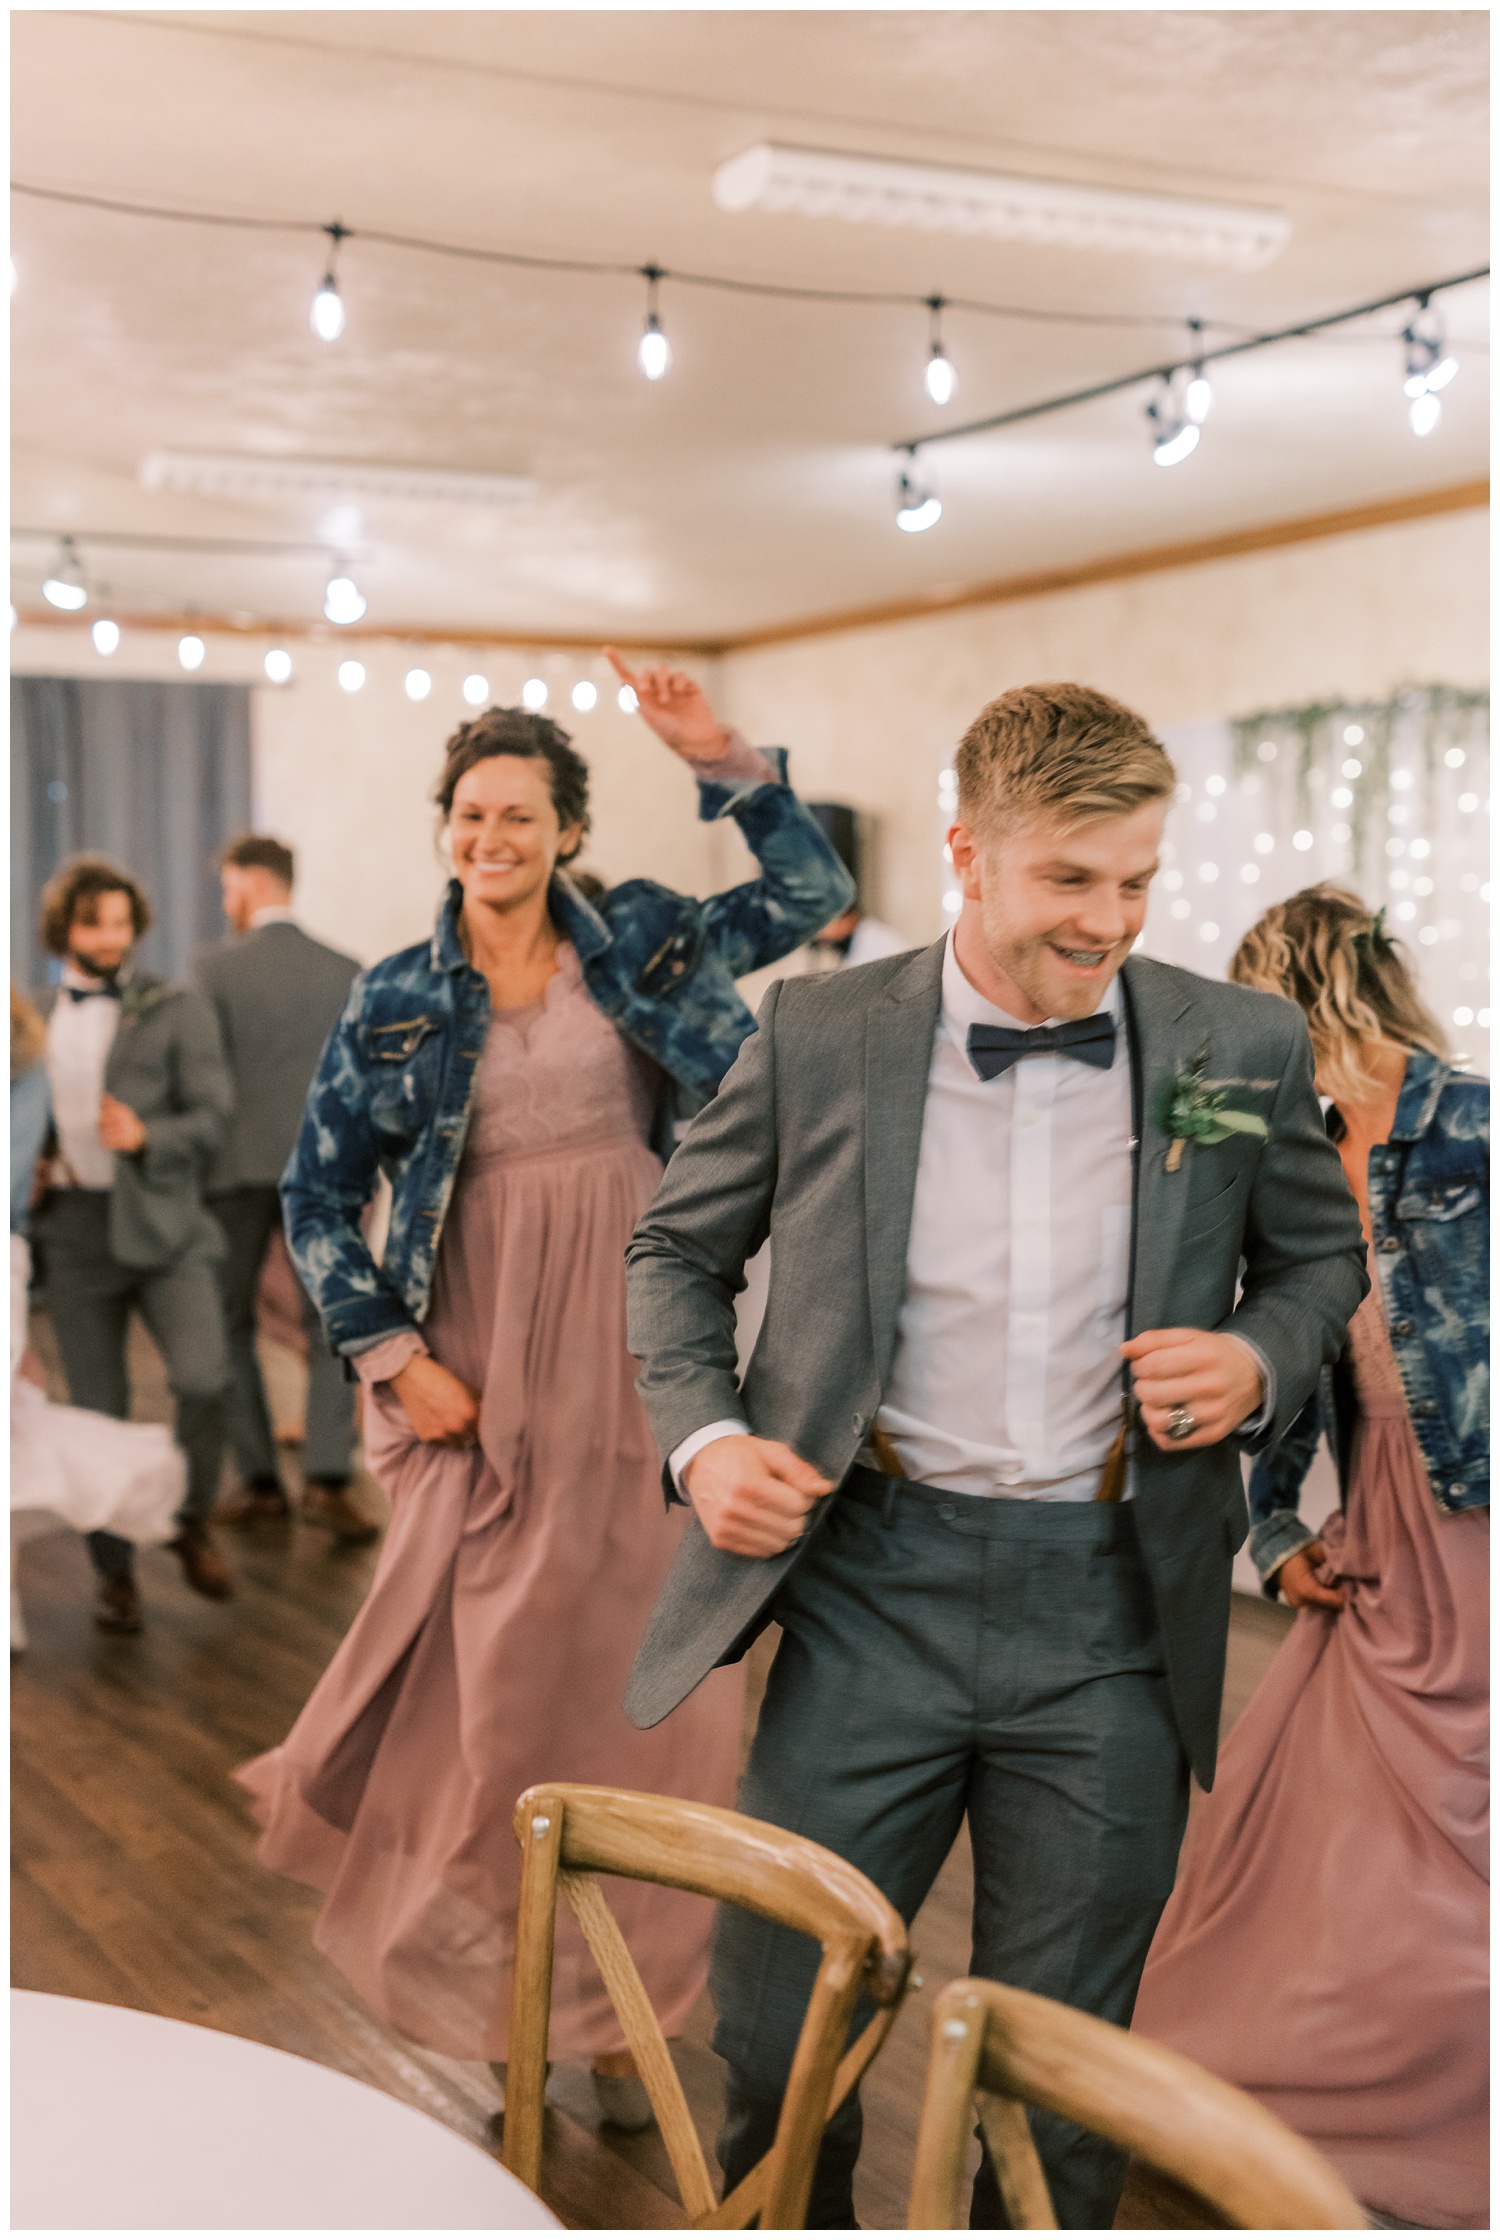 Line dancing at Illinois wedding reception